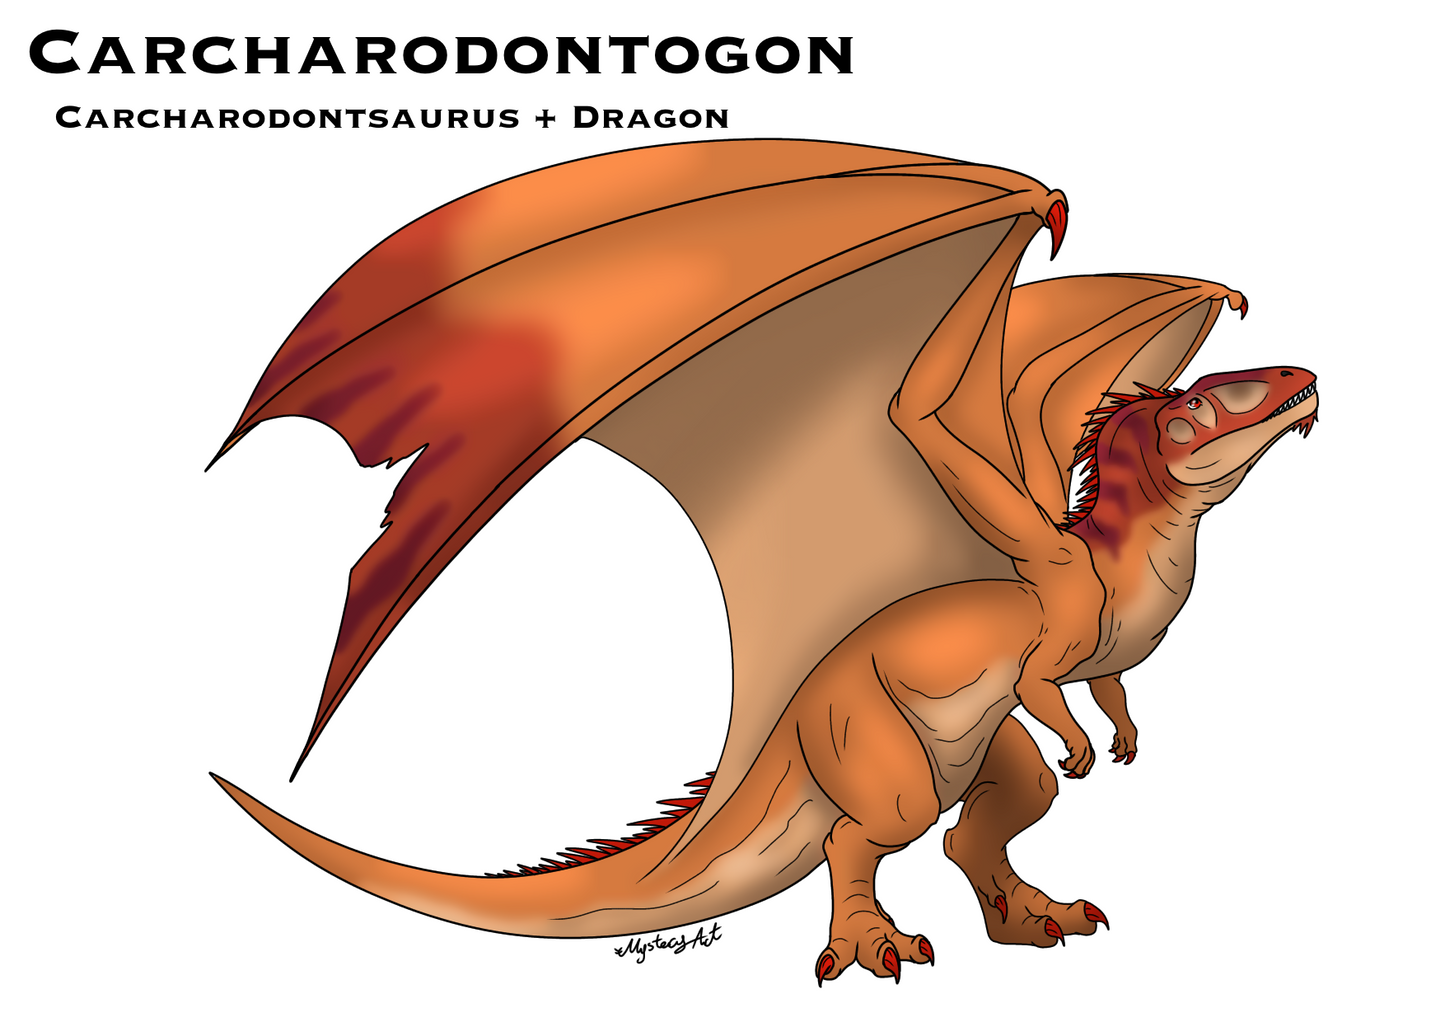 Carcharodontogon